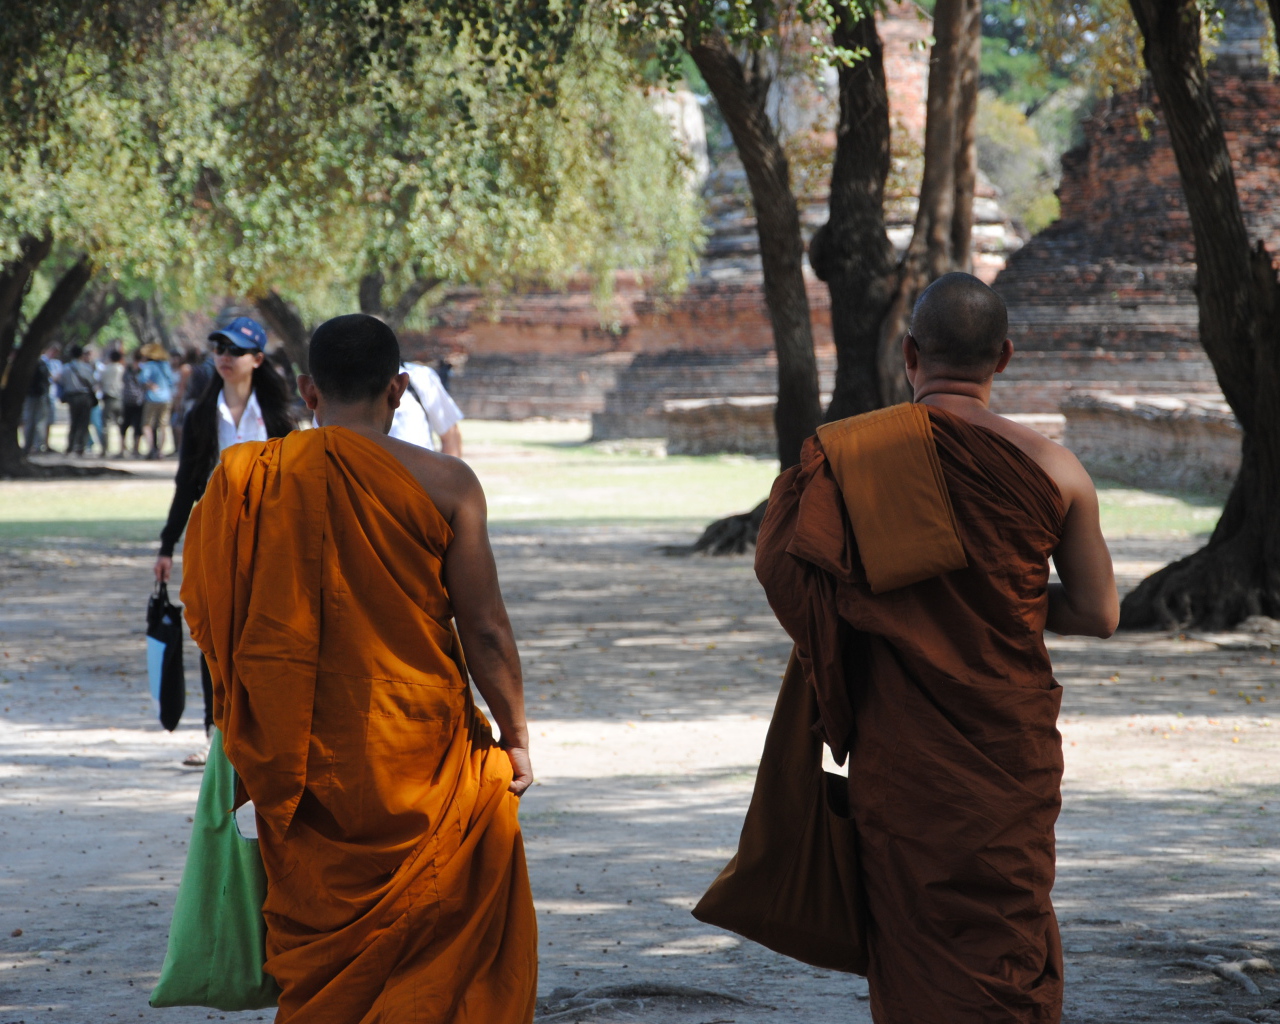 Buddhist monks on the street in the resort Ayuthaya, Thailand